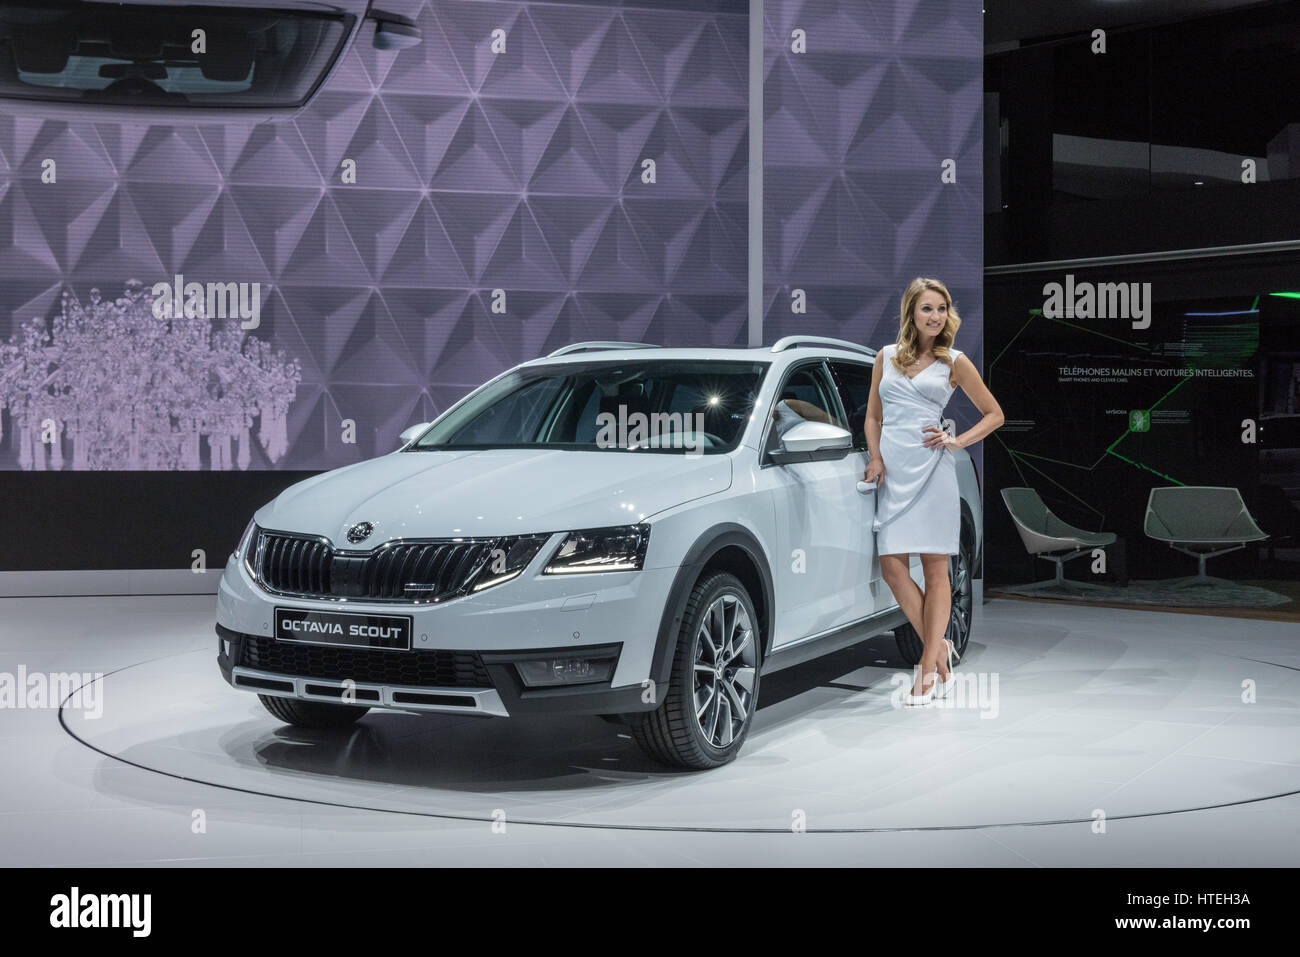 Skoda Octavia vRS in Genf, Schweiz Internationalen Auto und Motor Show  Stockfotografie - Alamy